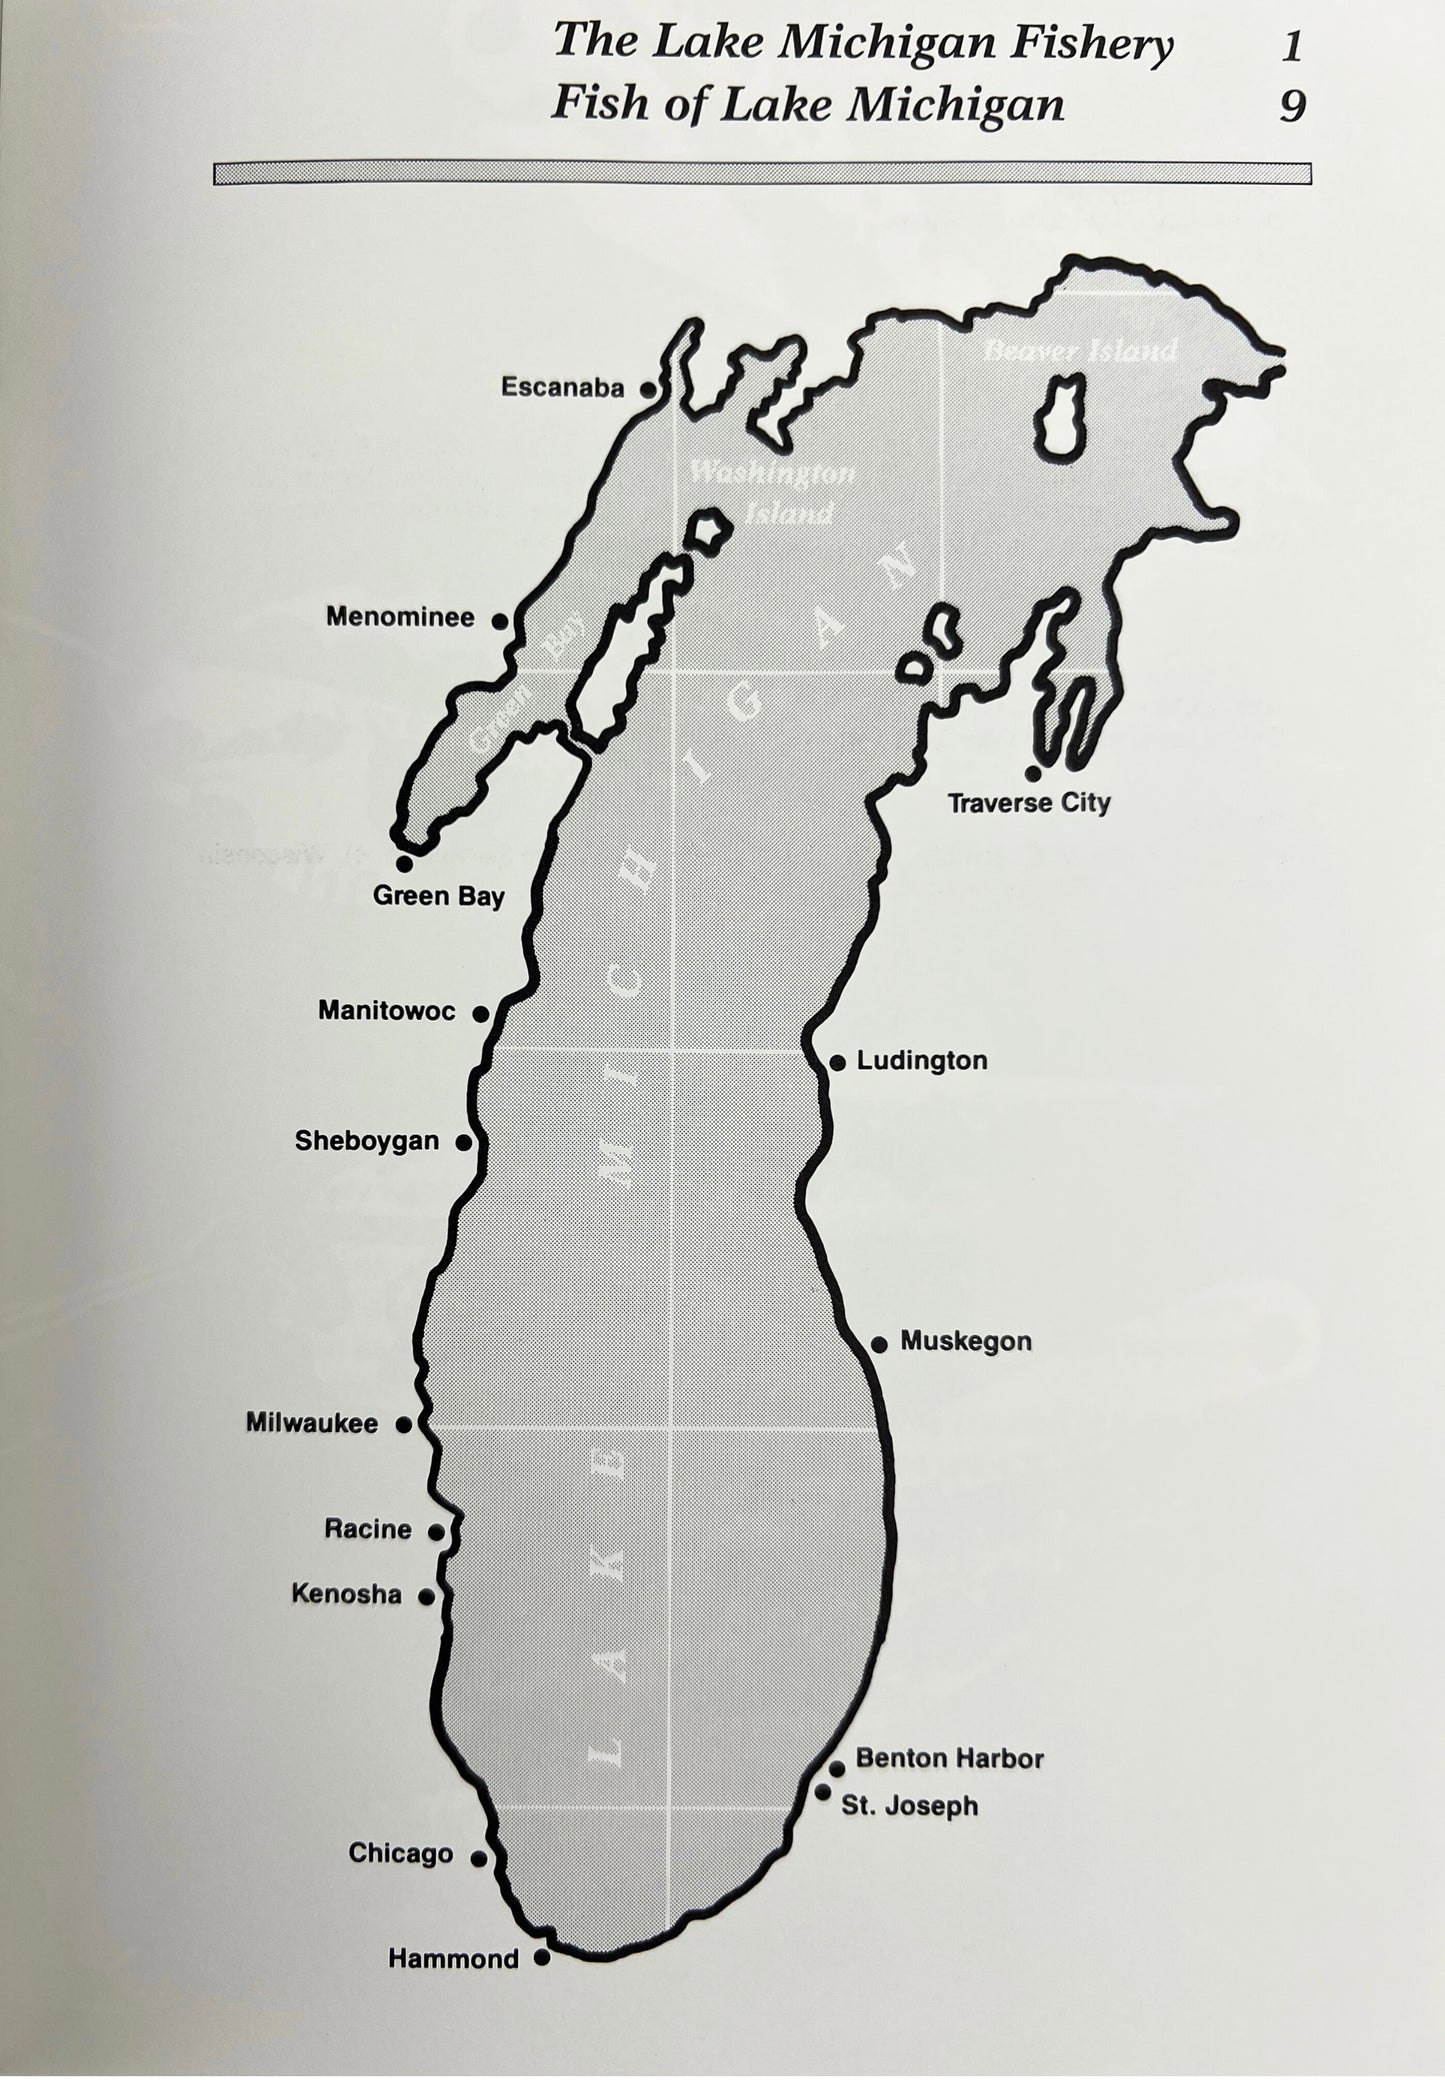 1986 Fish of Lake Michigan Guide Book by Warren Downs